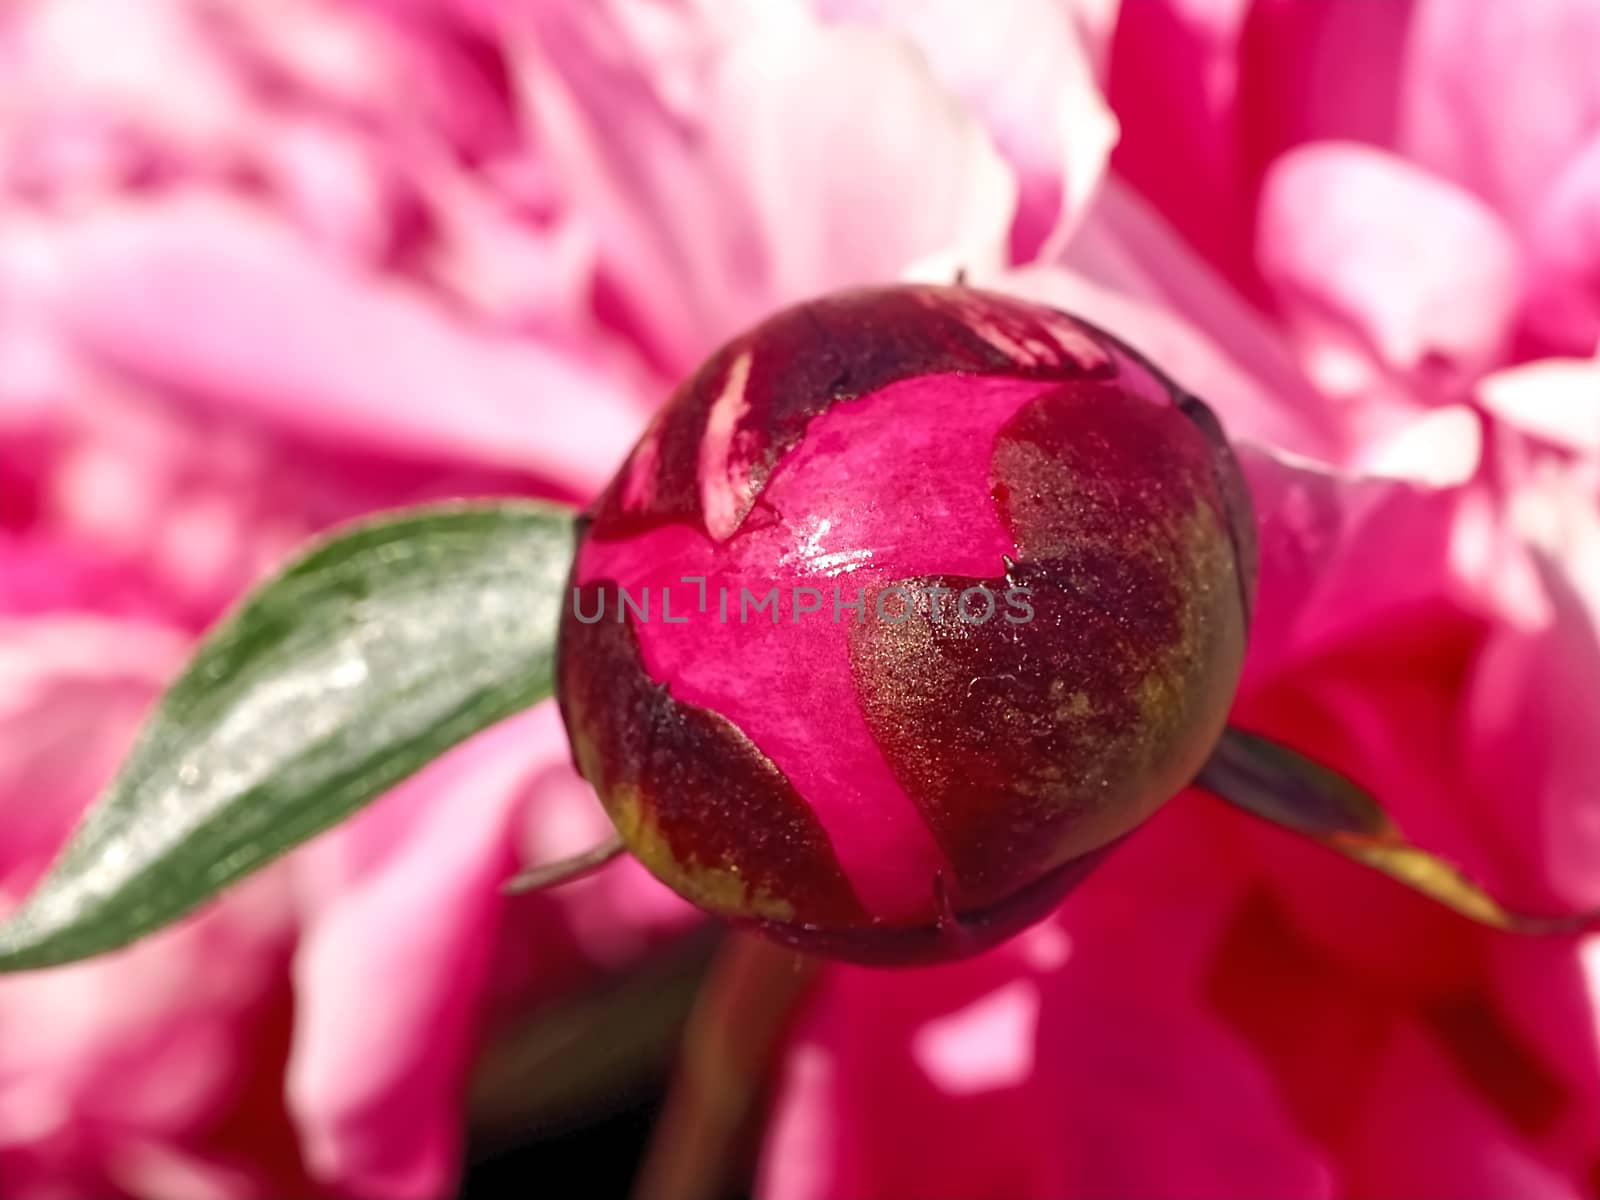 Beautiful macro of a pink peony flower by Stimmungsbilder